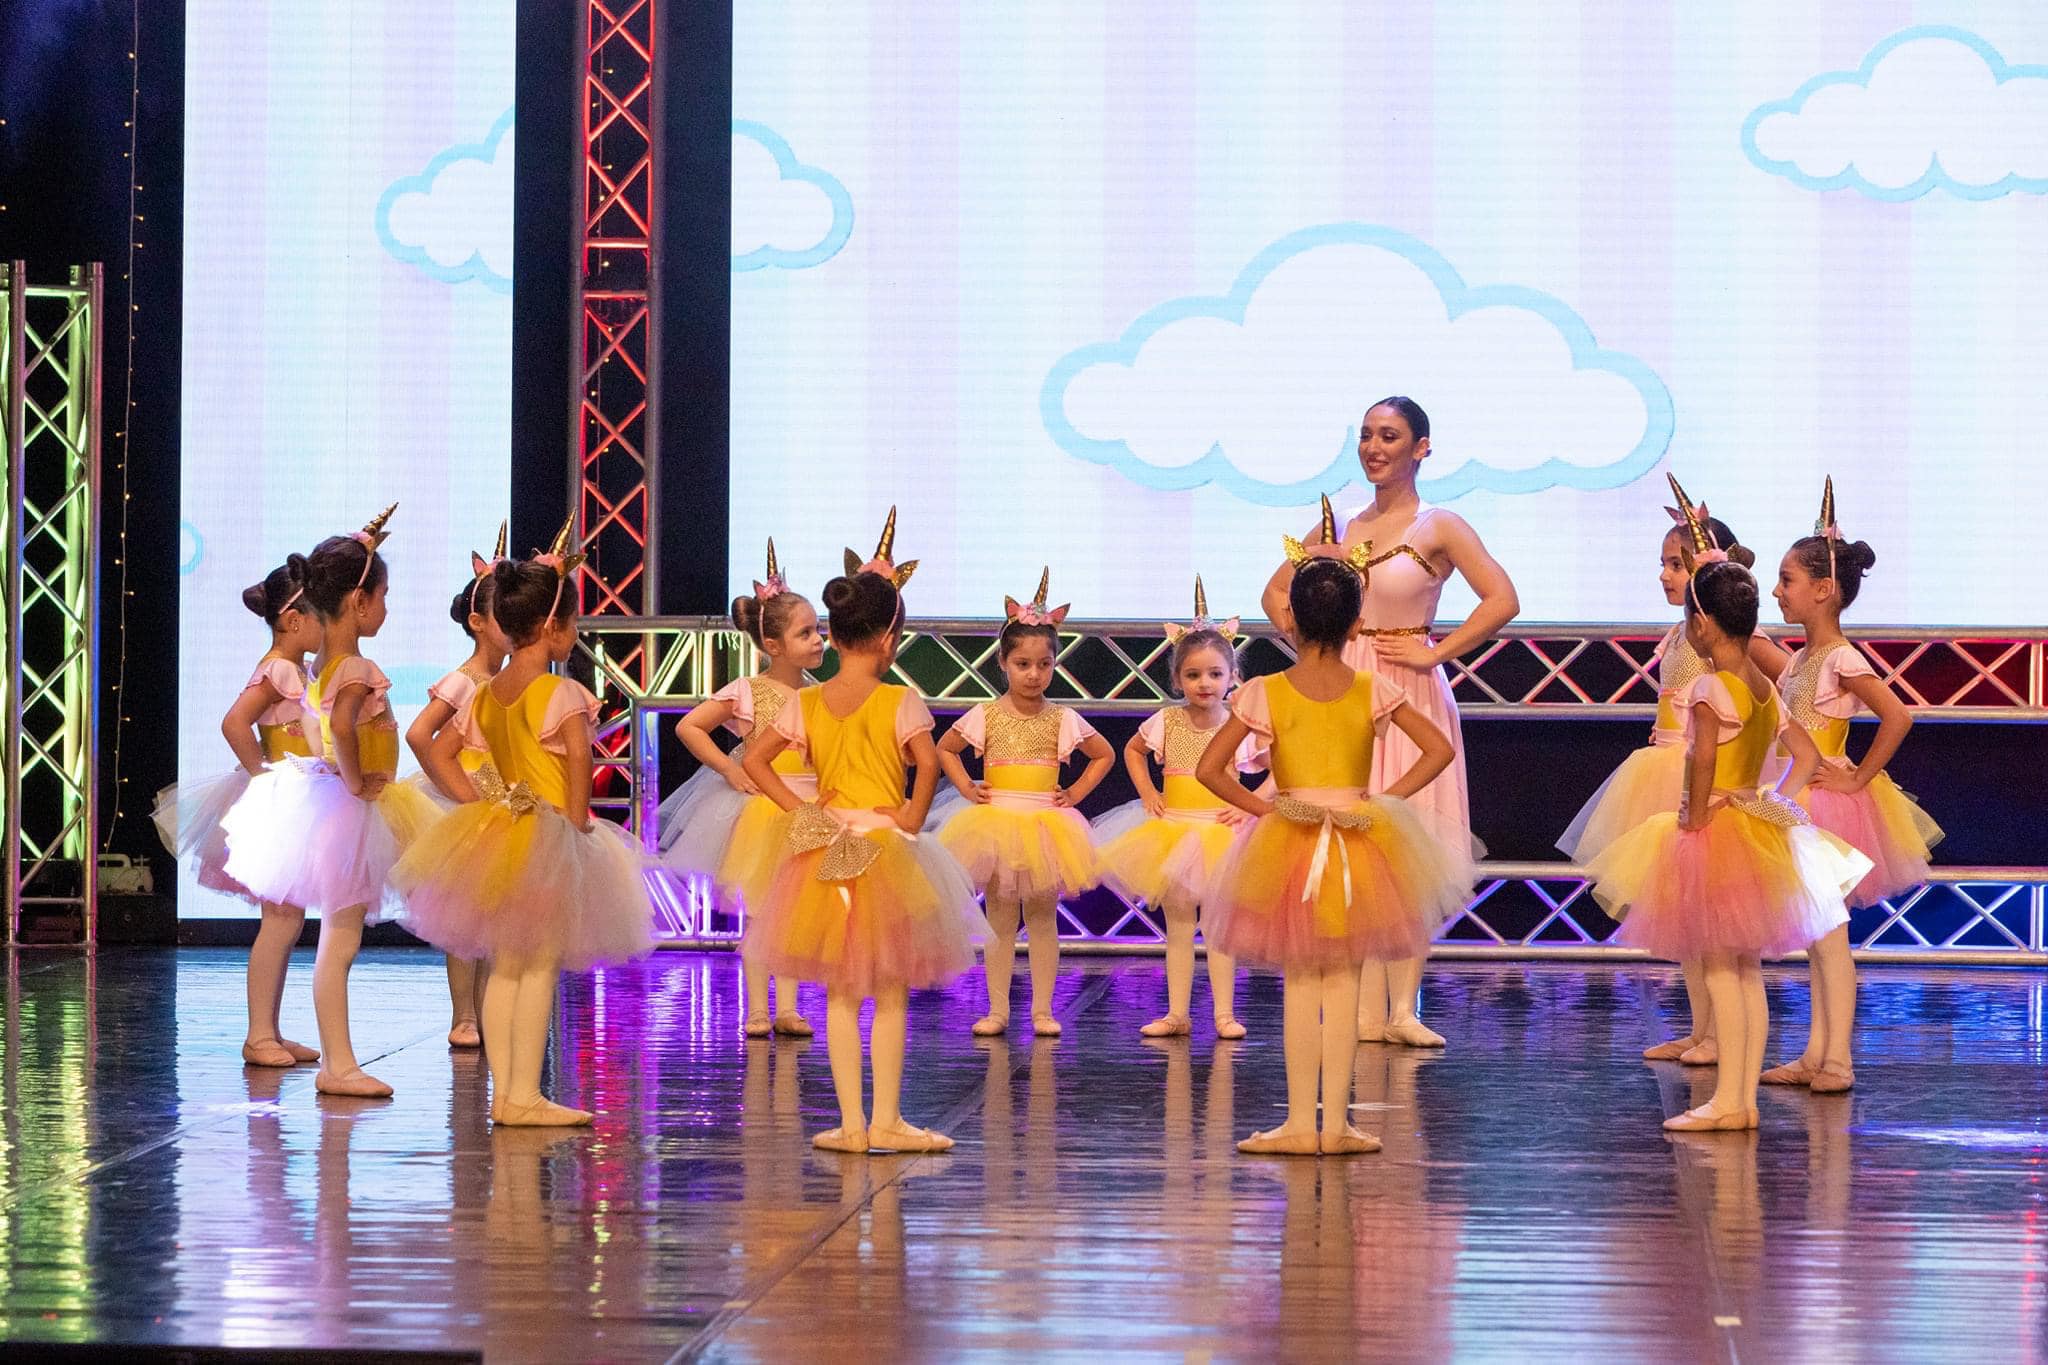 Katerina Poupazi Cosma Dance School: Ballet lessons registrations are open!